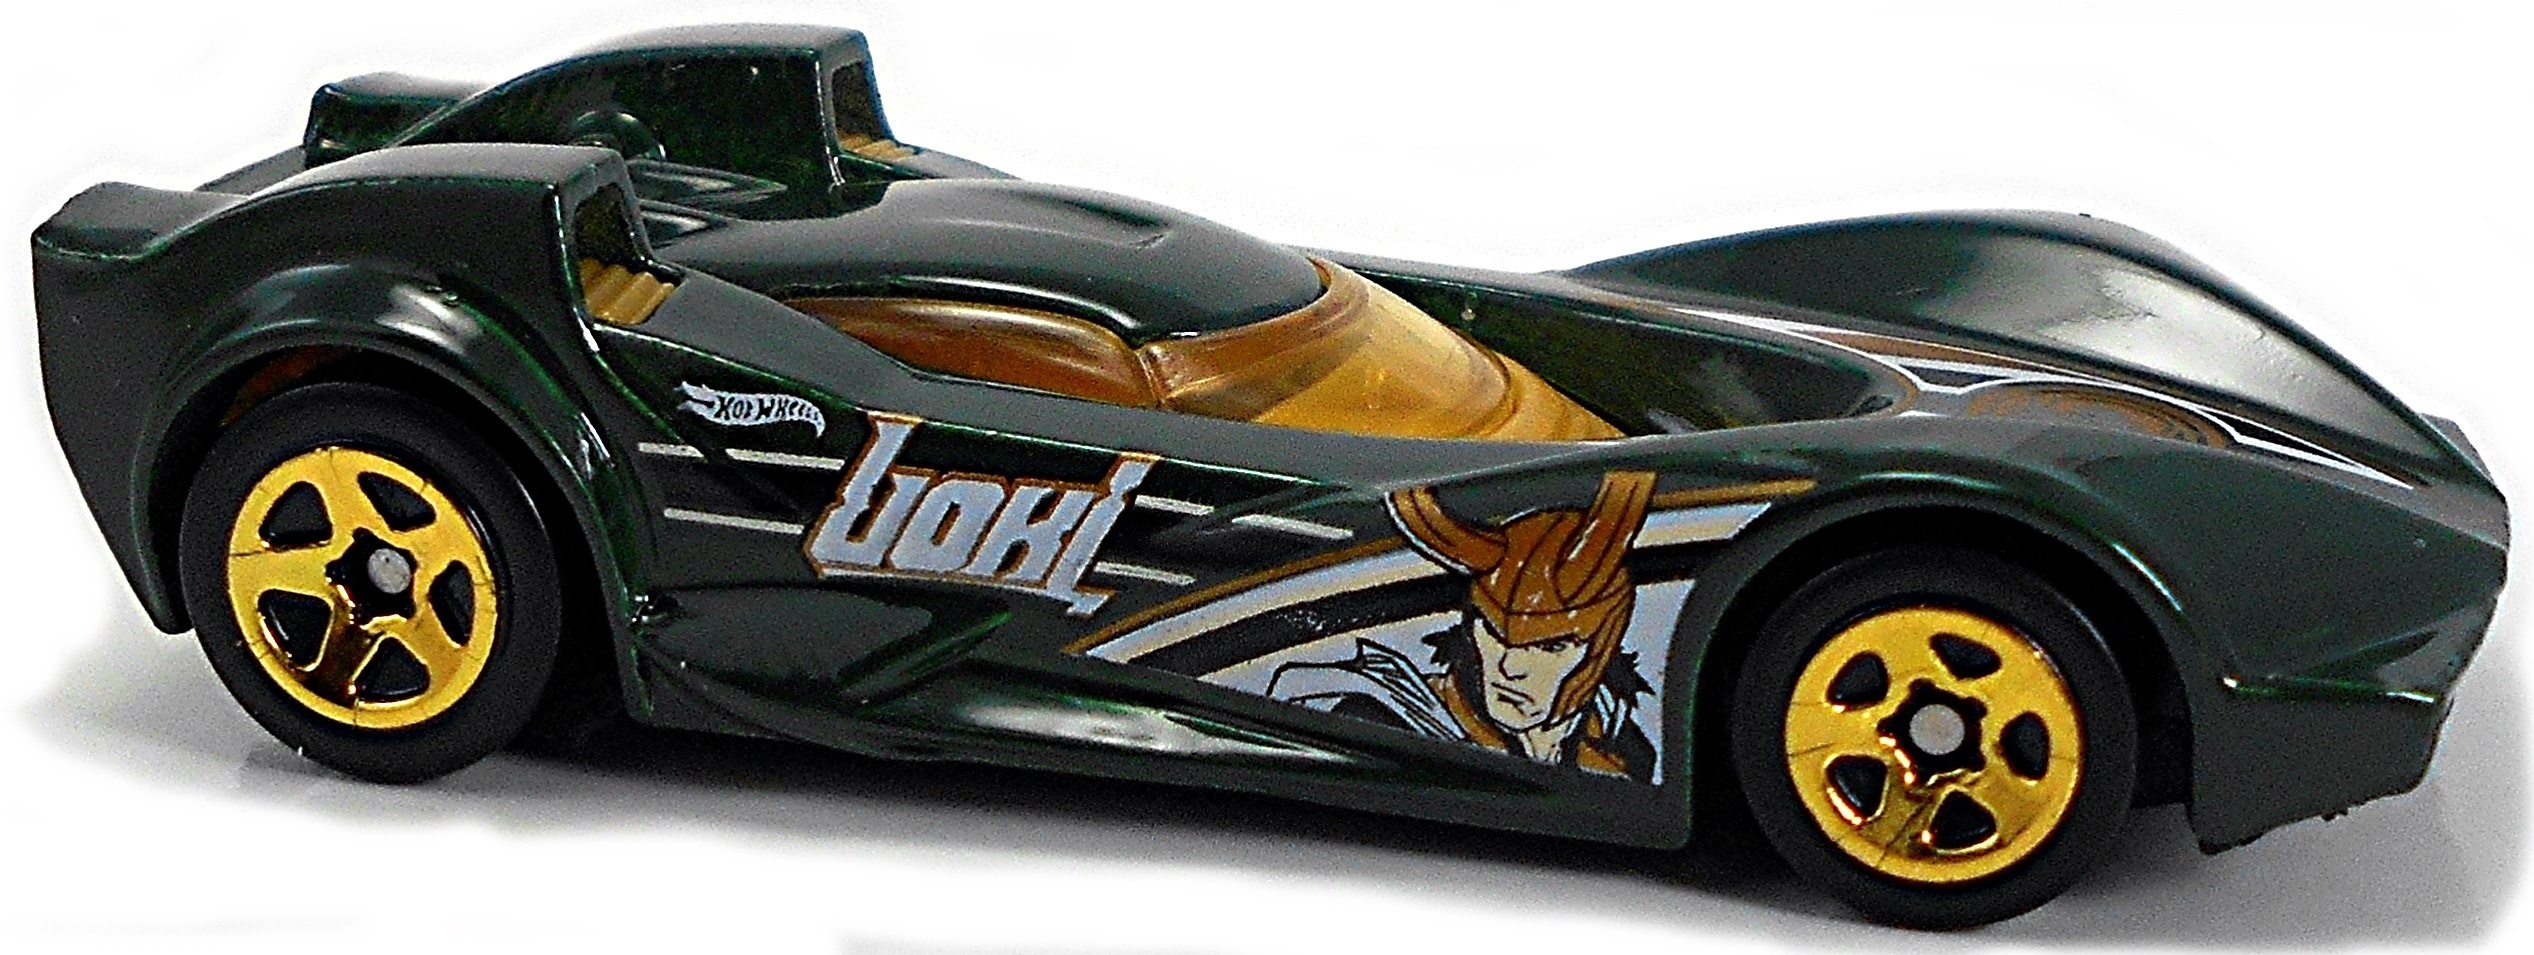 Hot Wheels Marvel Avengers Series Auto Car FYY62 6/6 Scoopa di Fuego Loki 